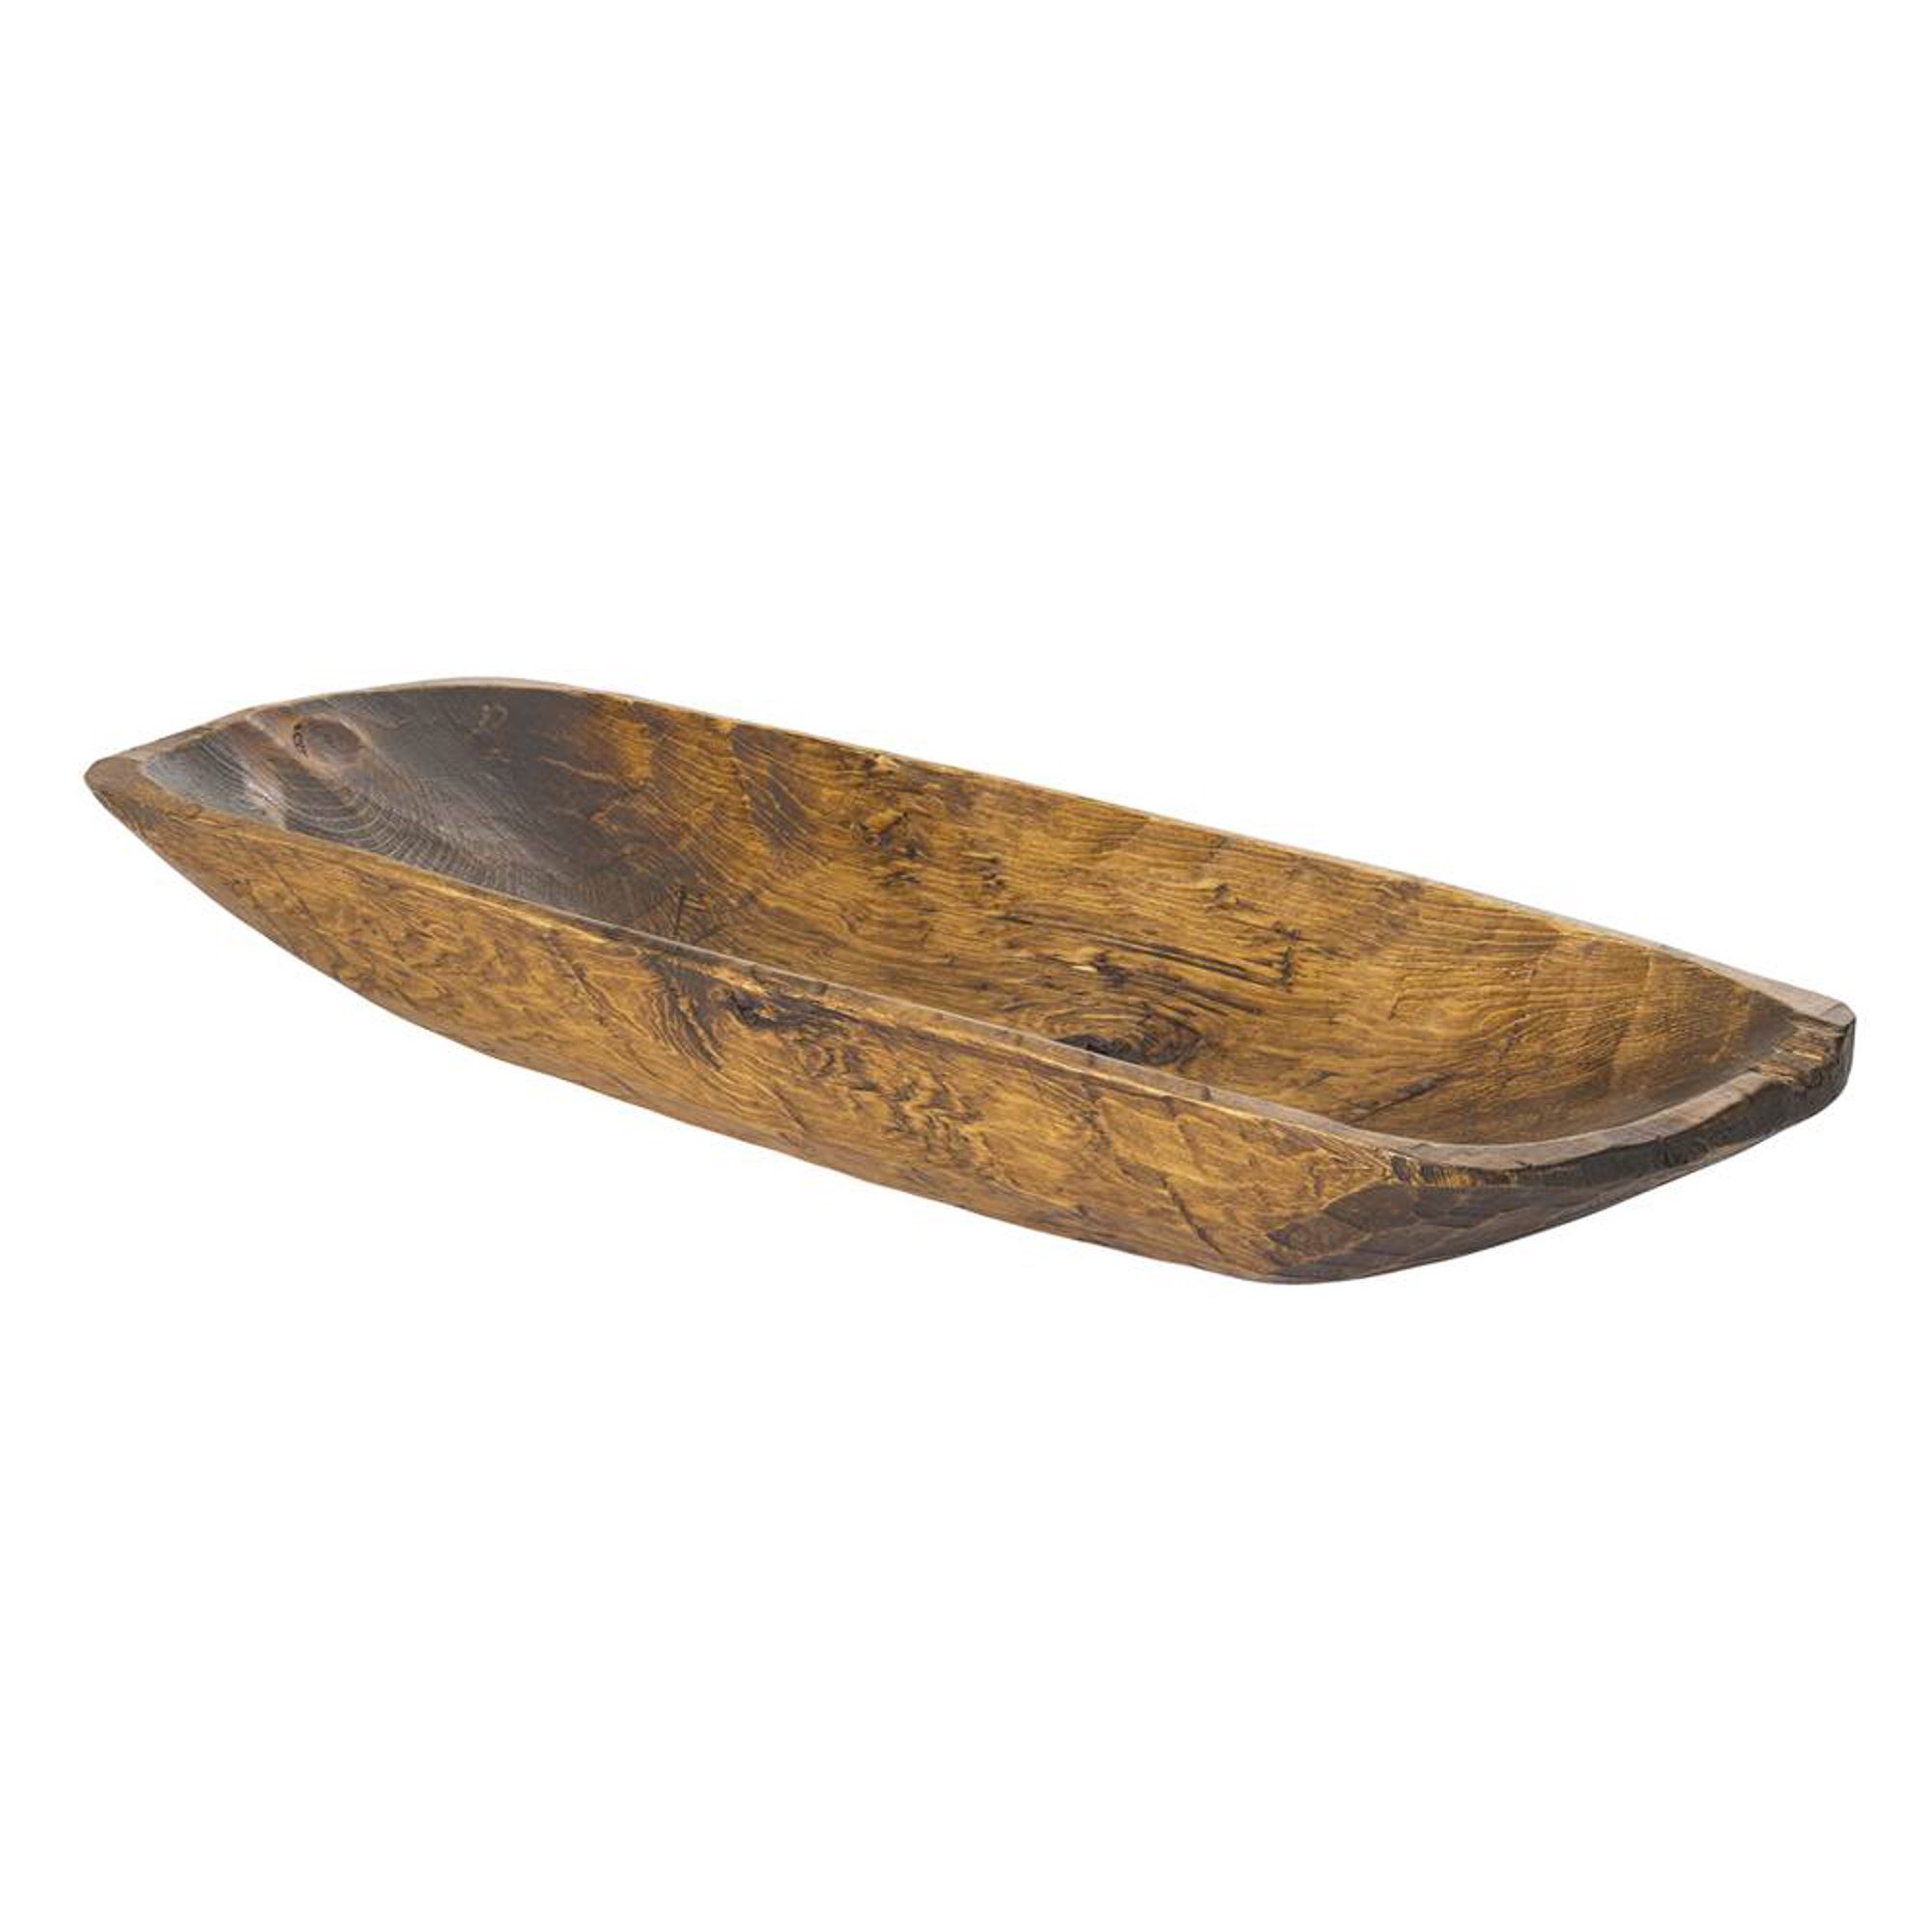 Luxury Living Hand Carved Rustic Solid Wood Reg Decorative Bowl in Pecan Brown | Walmart (US)